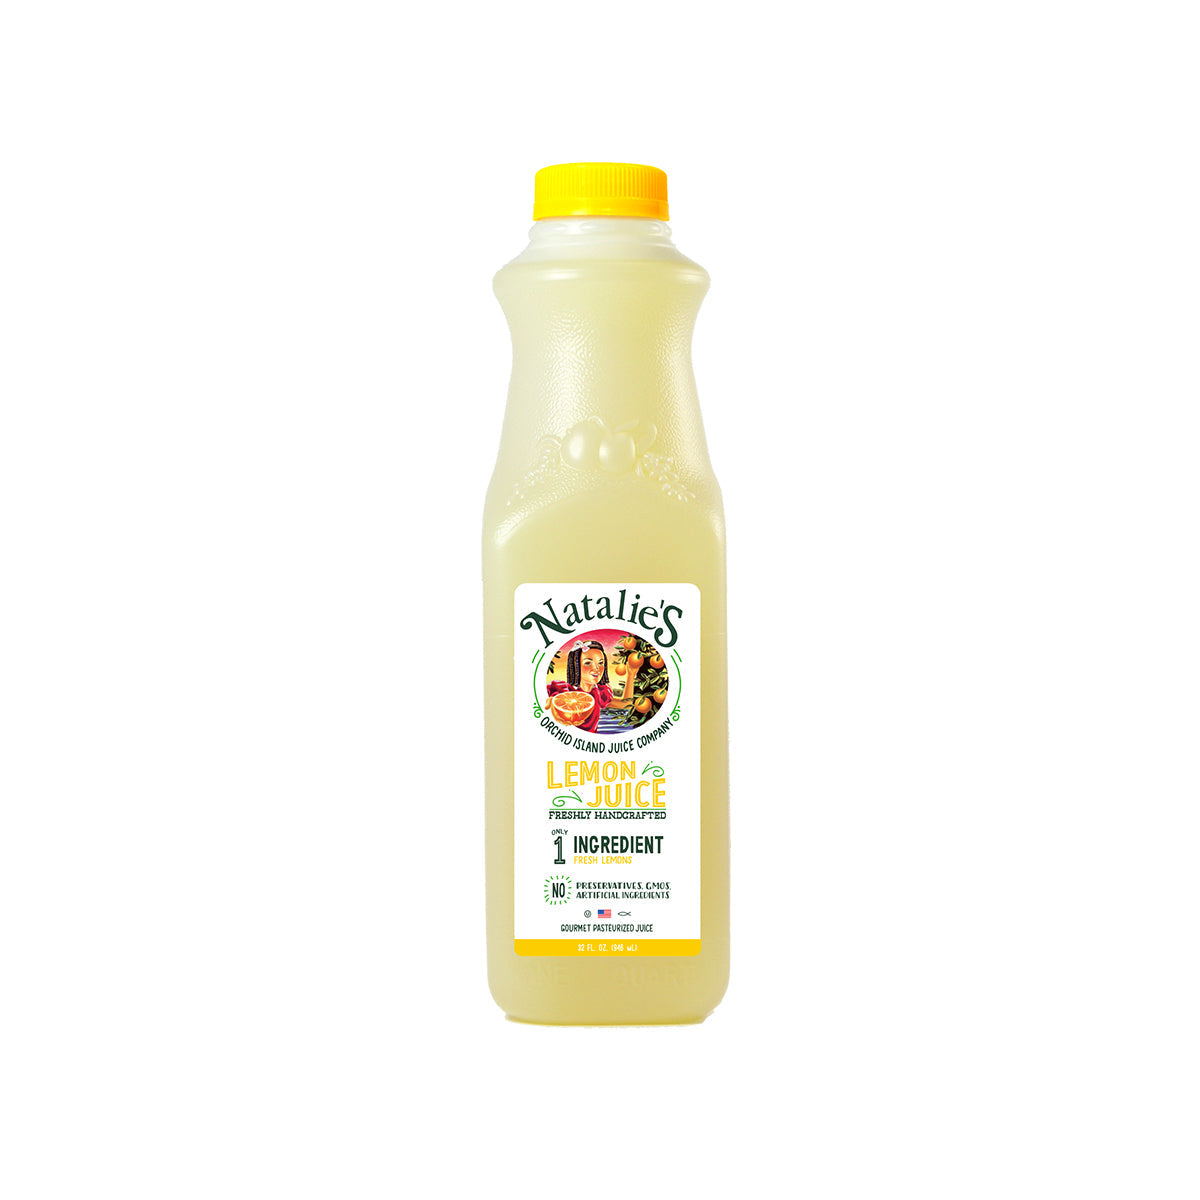 Natalie'S Orchid Island Lemon Juice 32 OZ